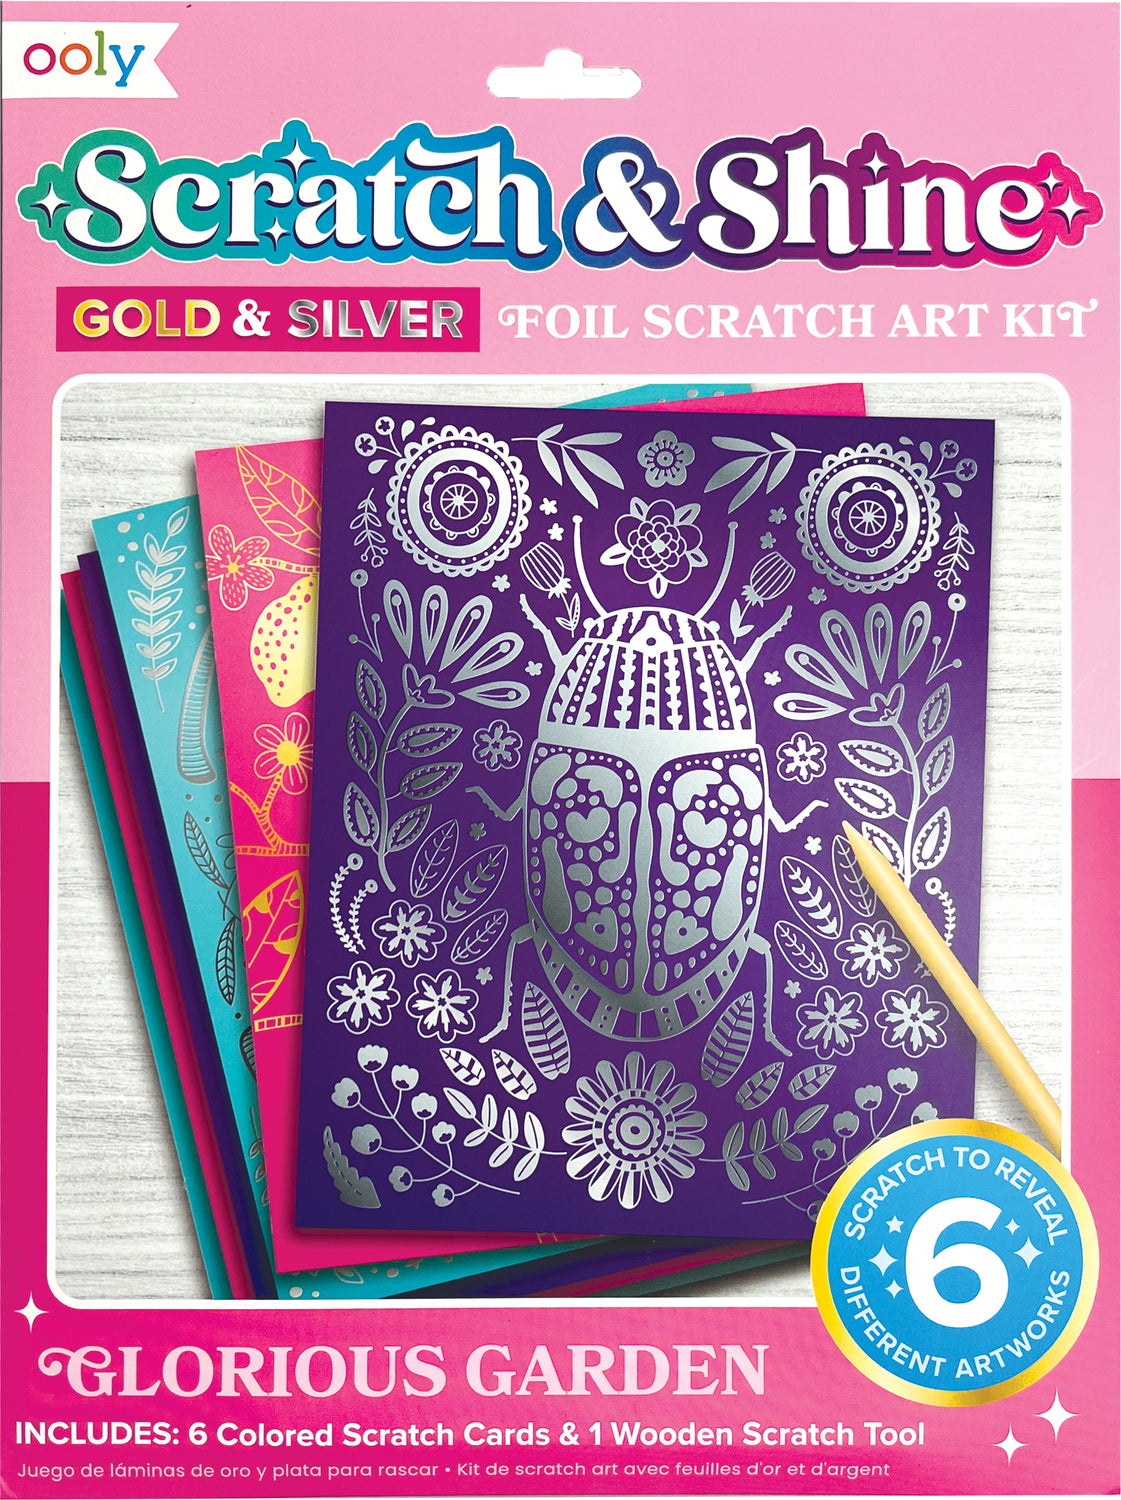 Scratch & Shine Foil Scratch Art Kits - Glorious Garden (7 PC Set)